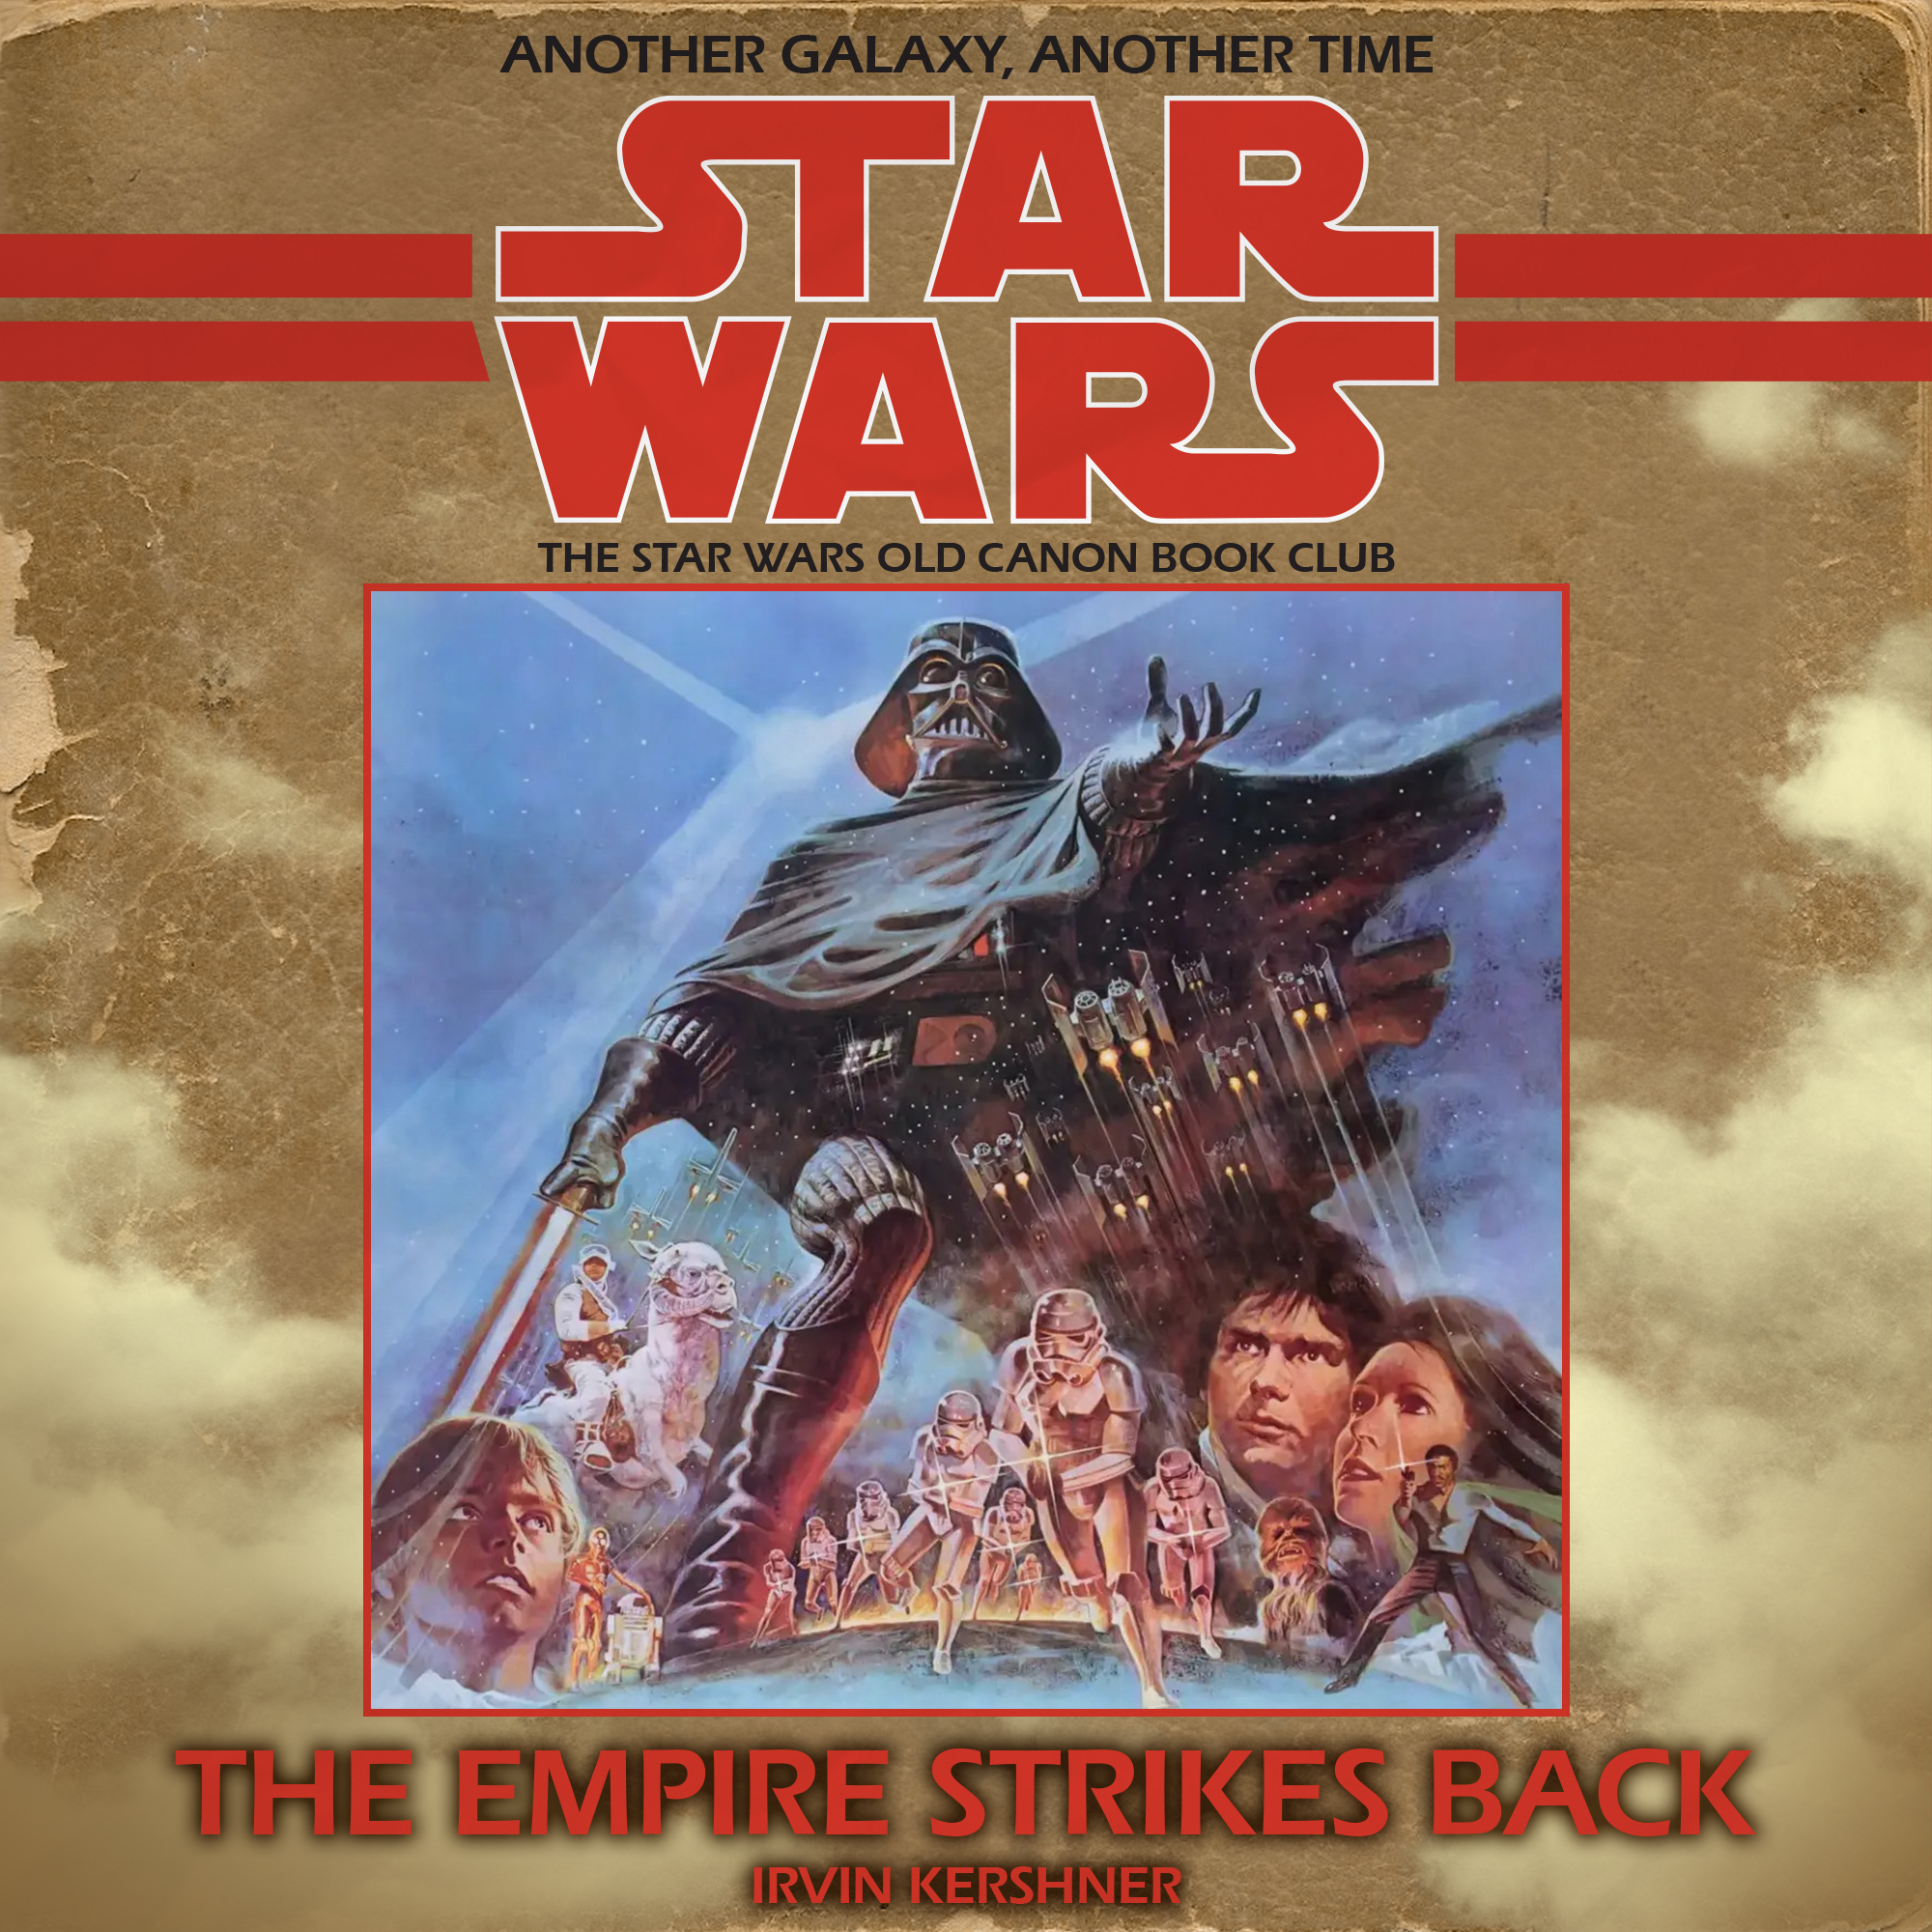 10: The Empire Strikes Back Strikes Back